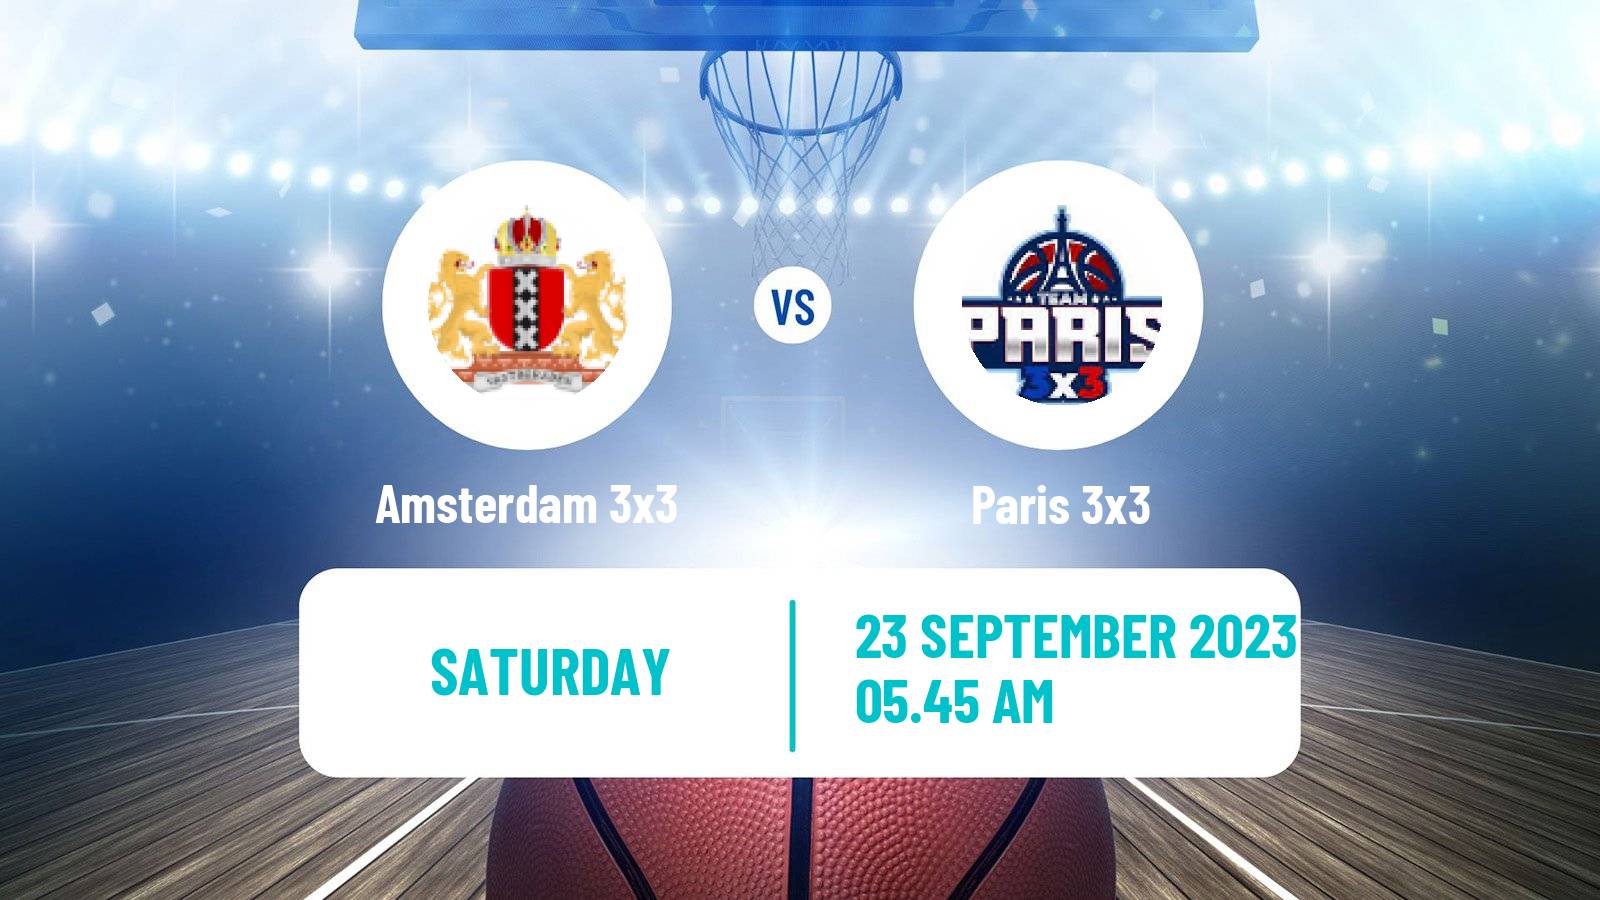 Basketball World Tour Сebu 3x3 Amsterdam 3x3 - Paris 3x3